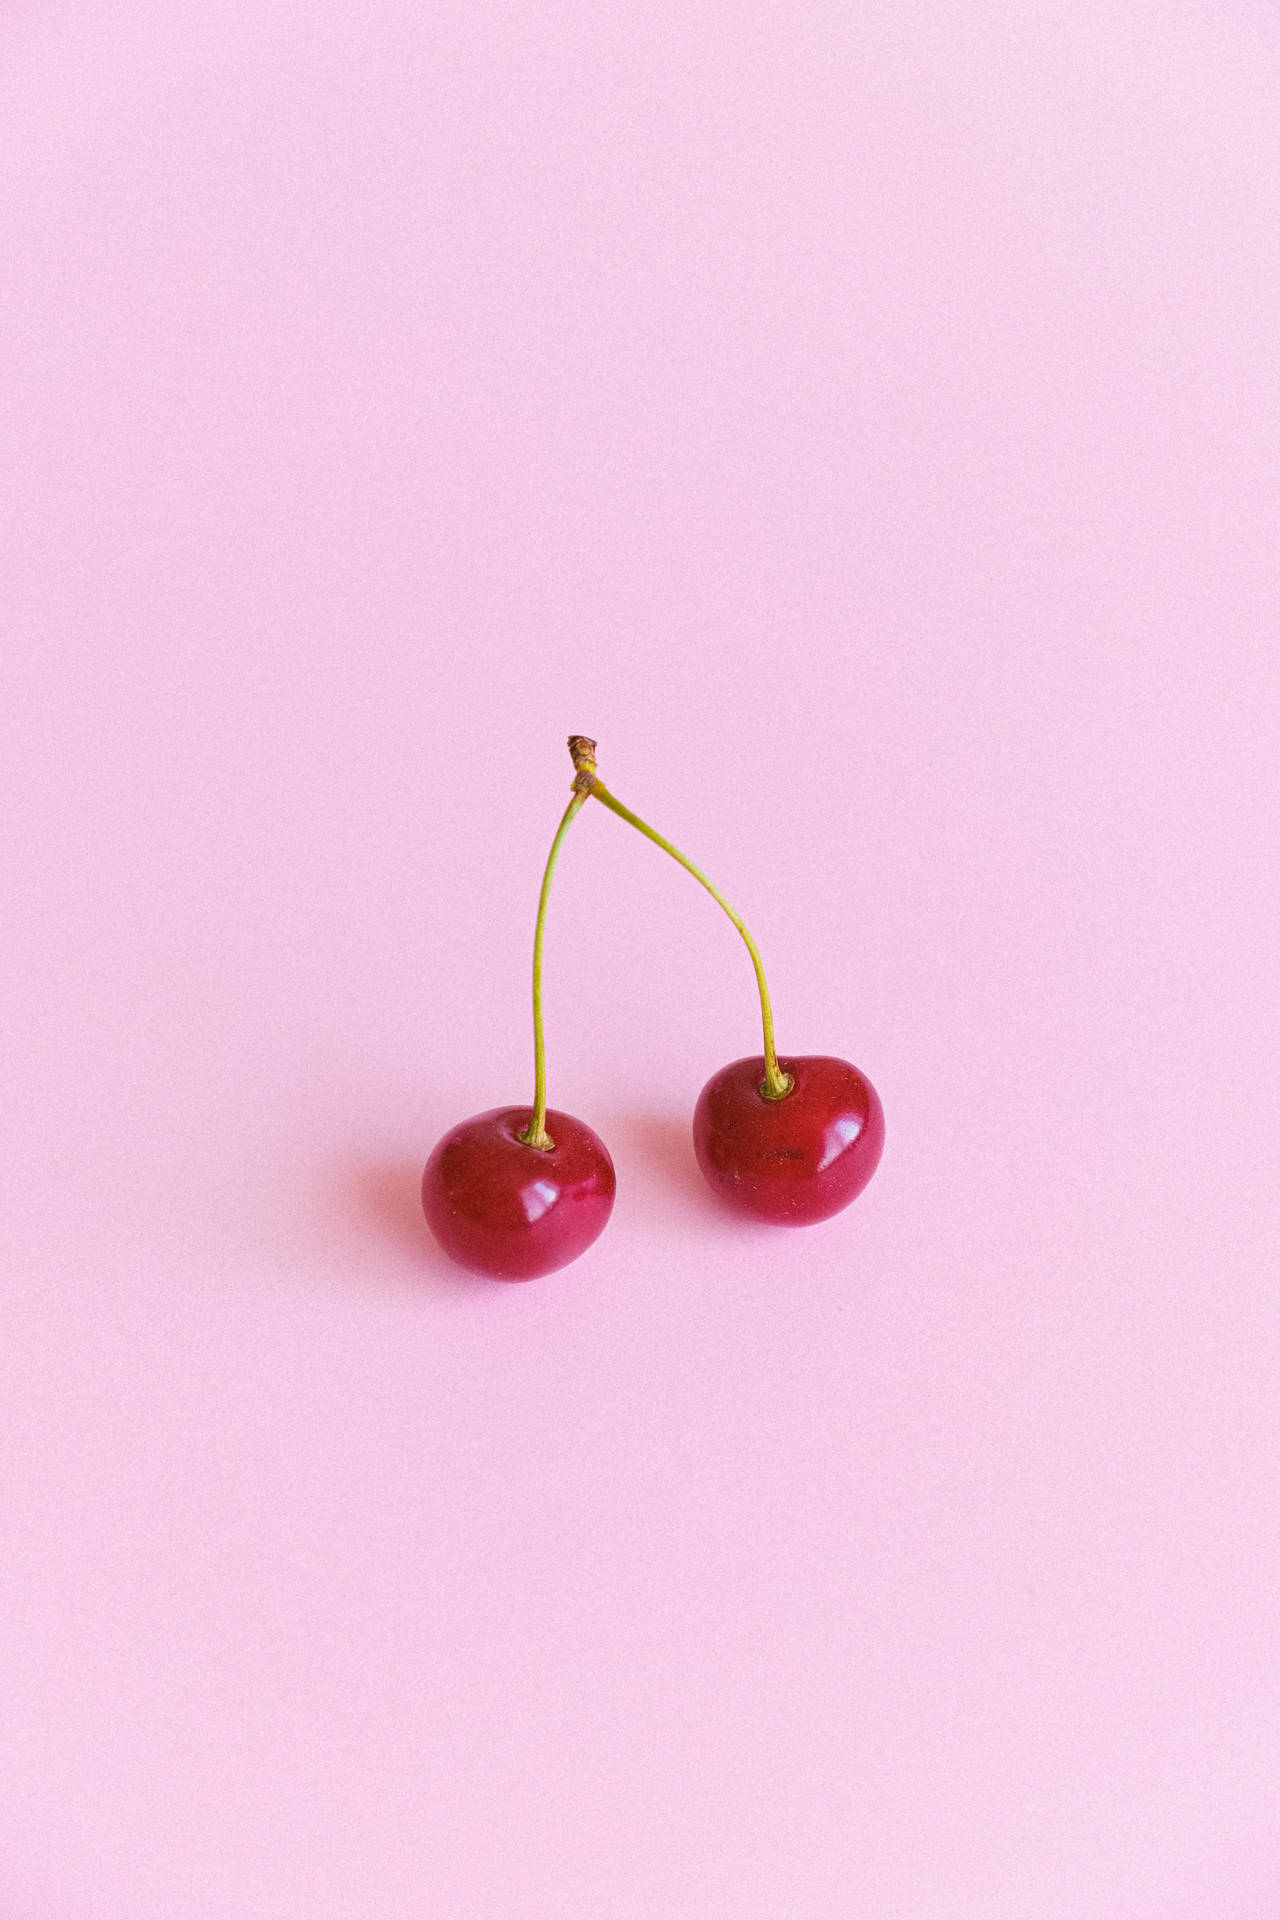 Cherries On Pink Background